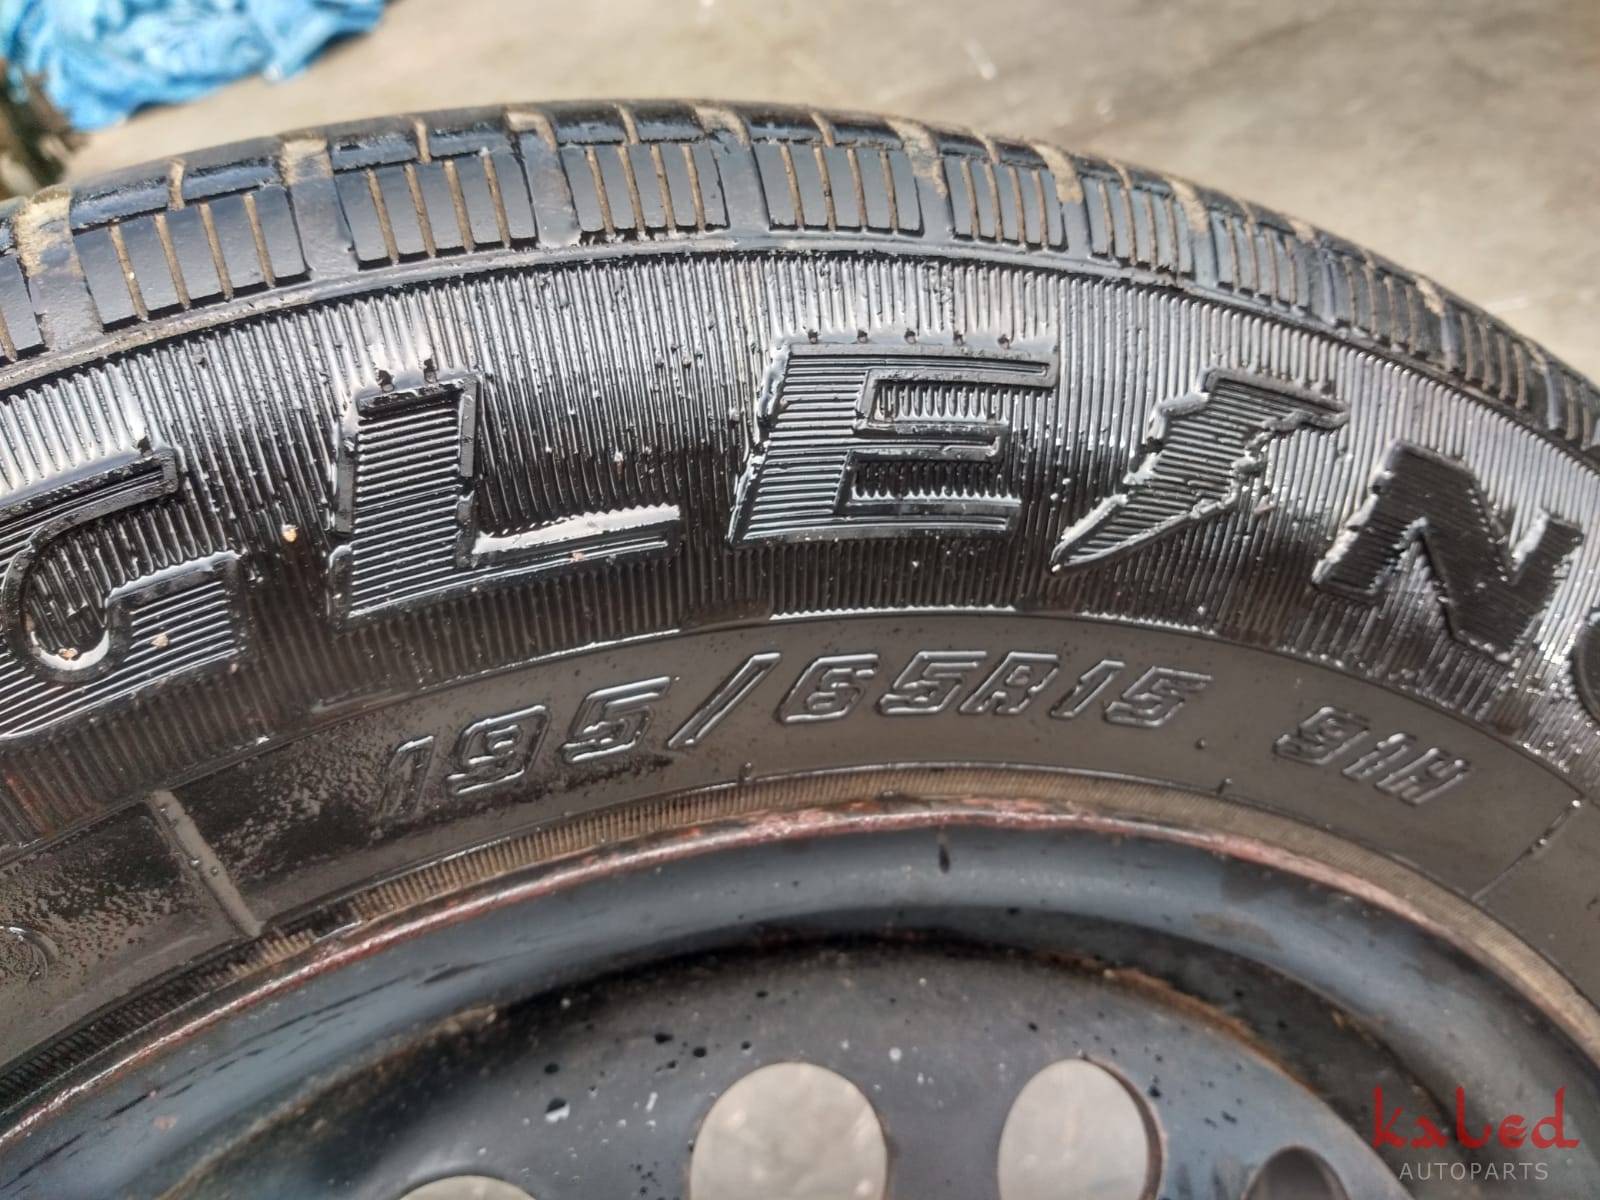 Roda de ferro aro 15 c/pneu meia vida  - Kaled Auto Parts